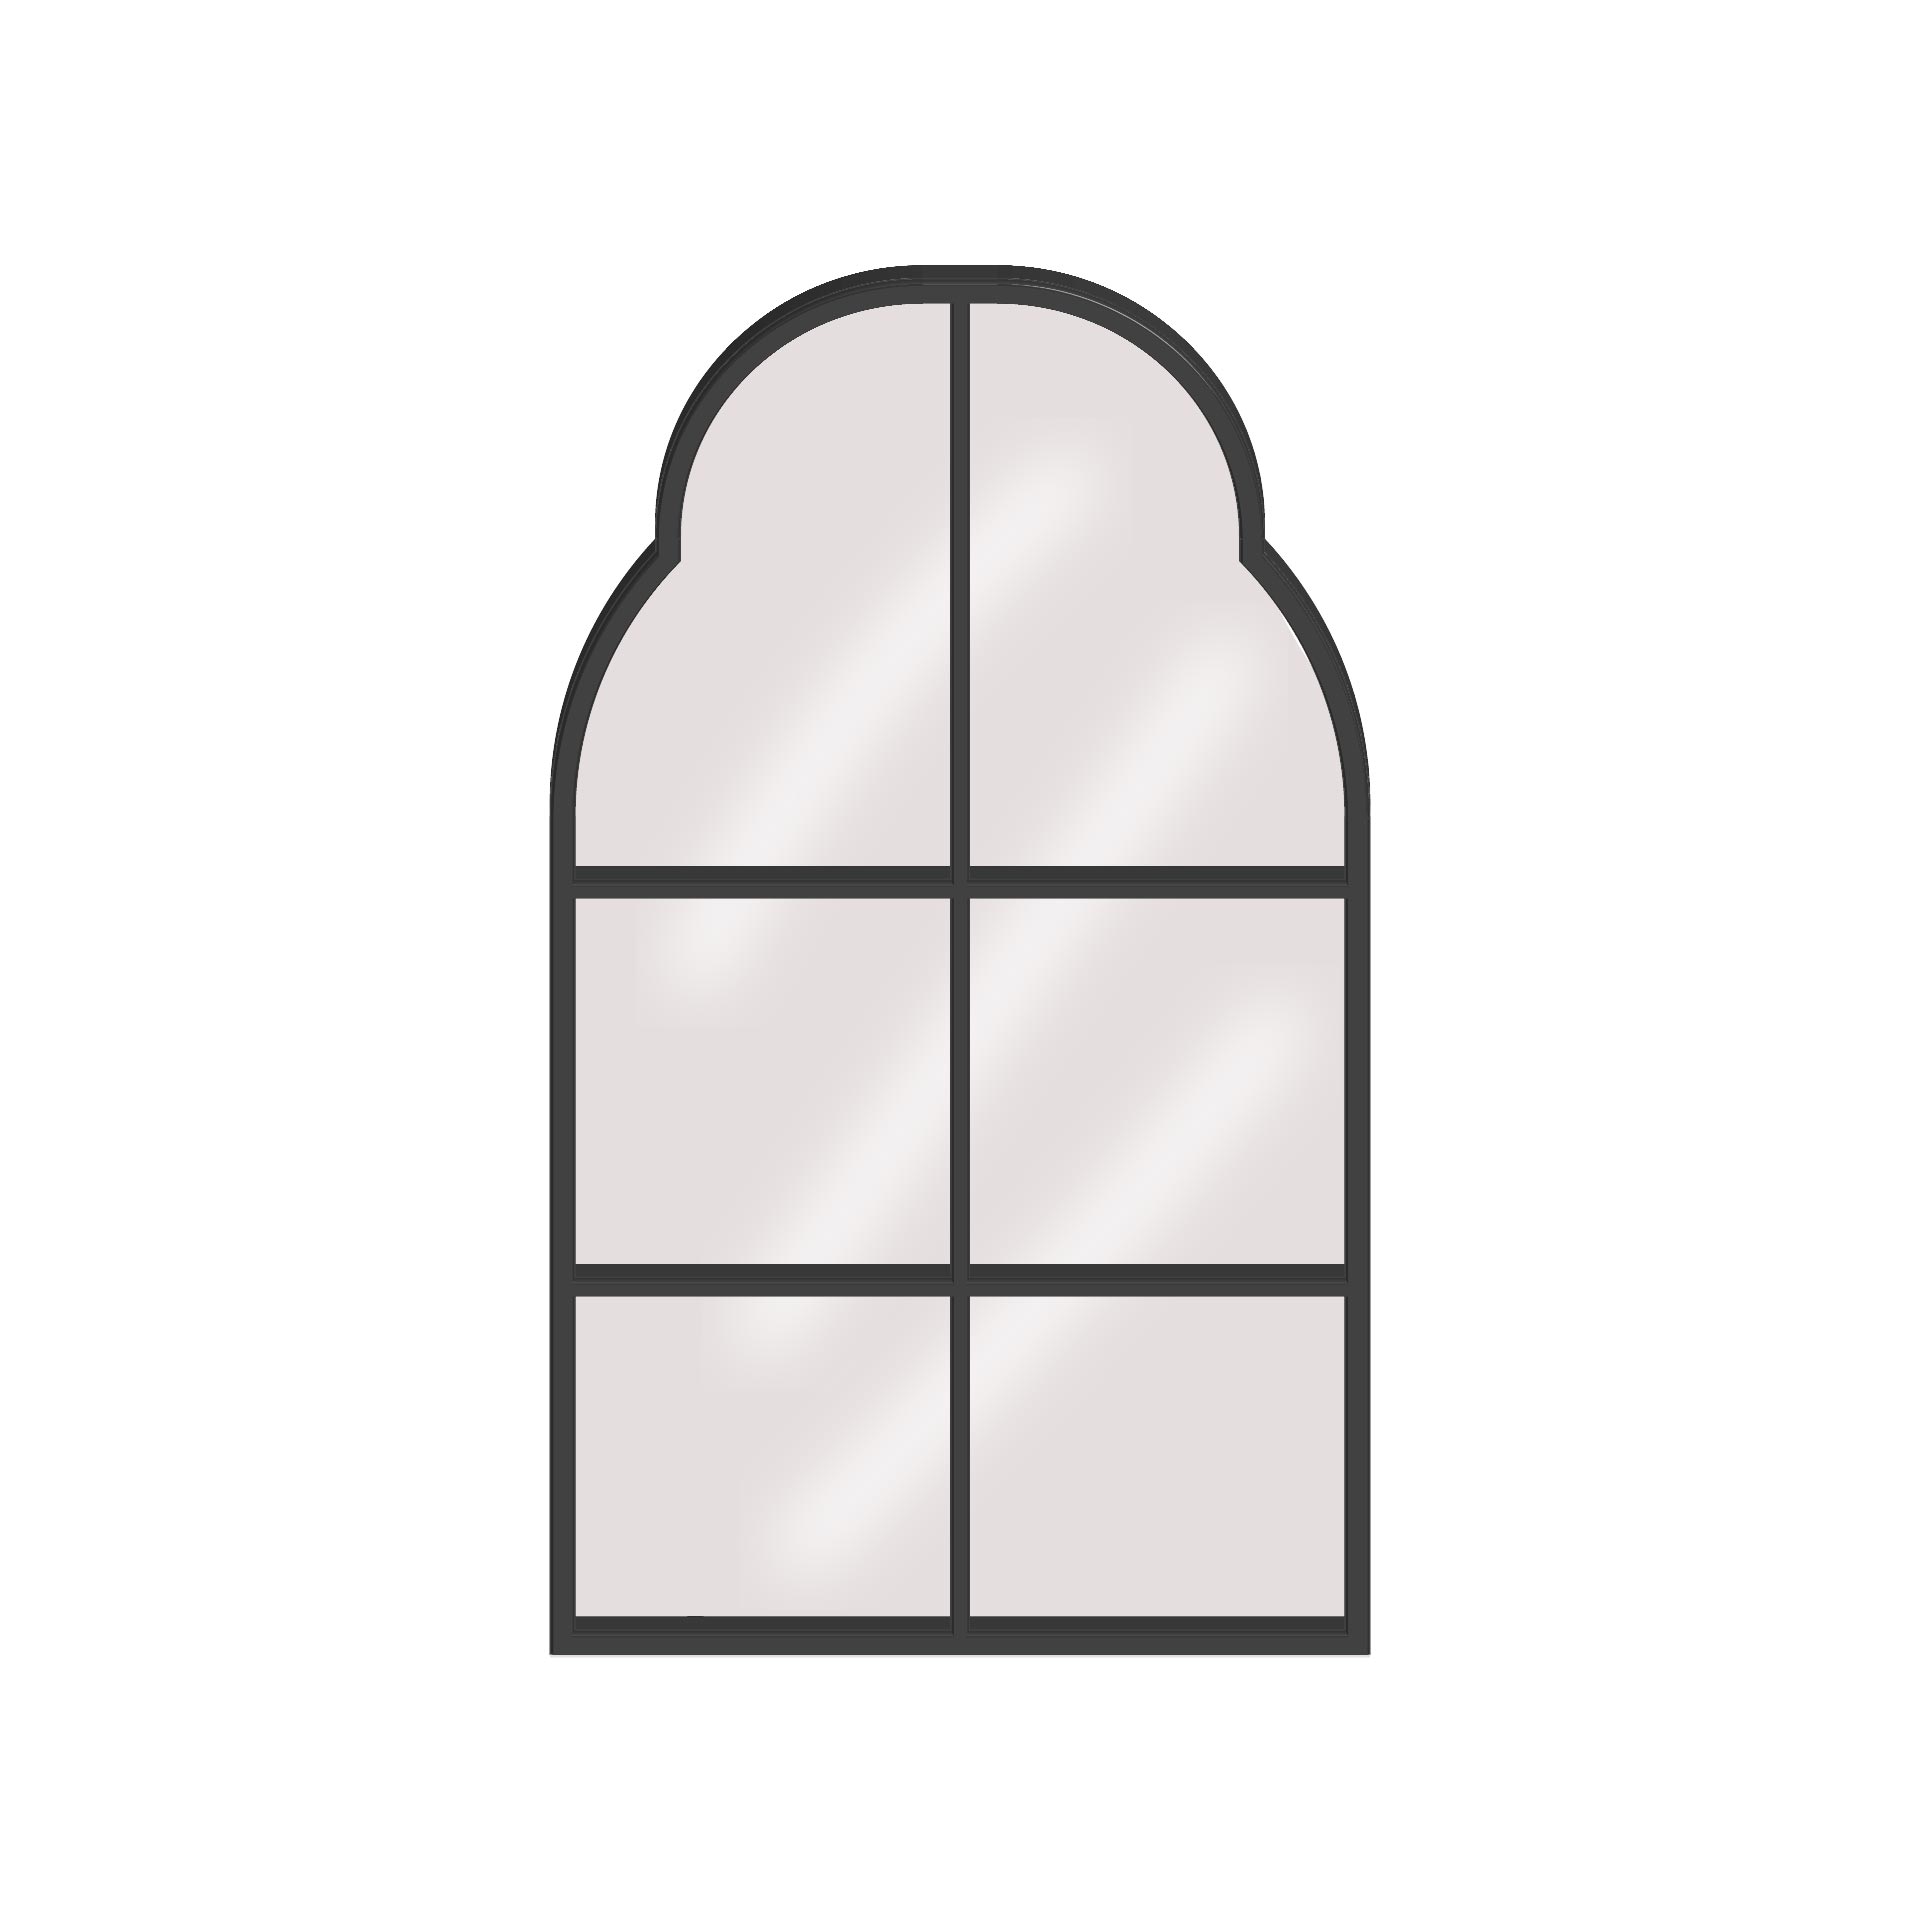 8-best-window-template-printable-pdf-for-free-at-printablee